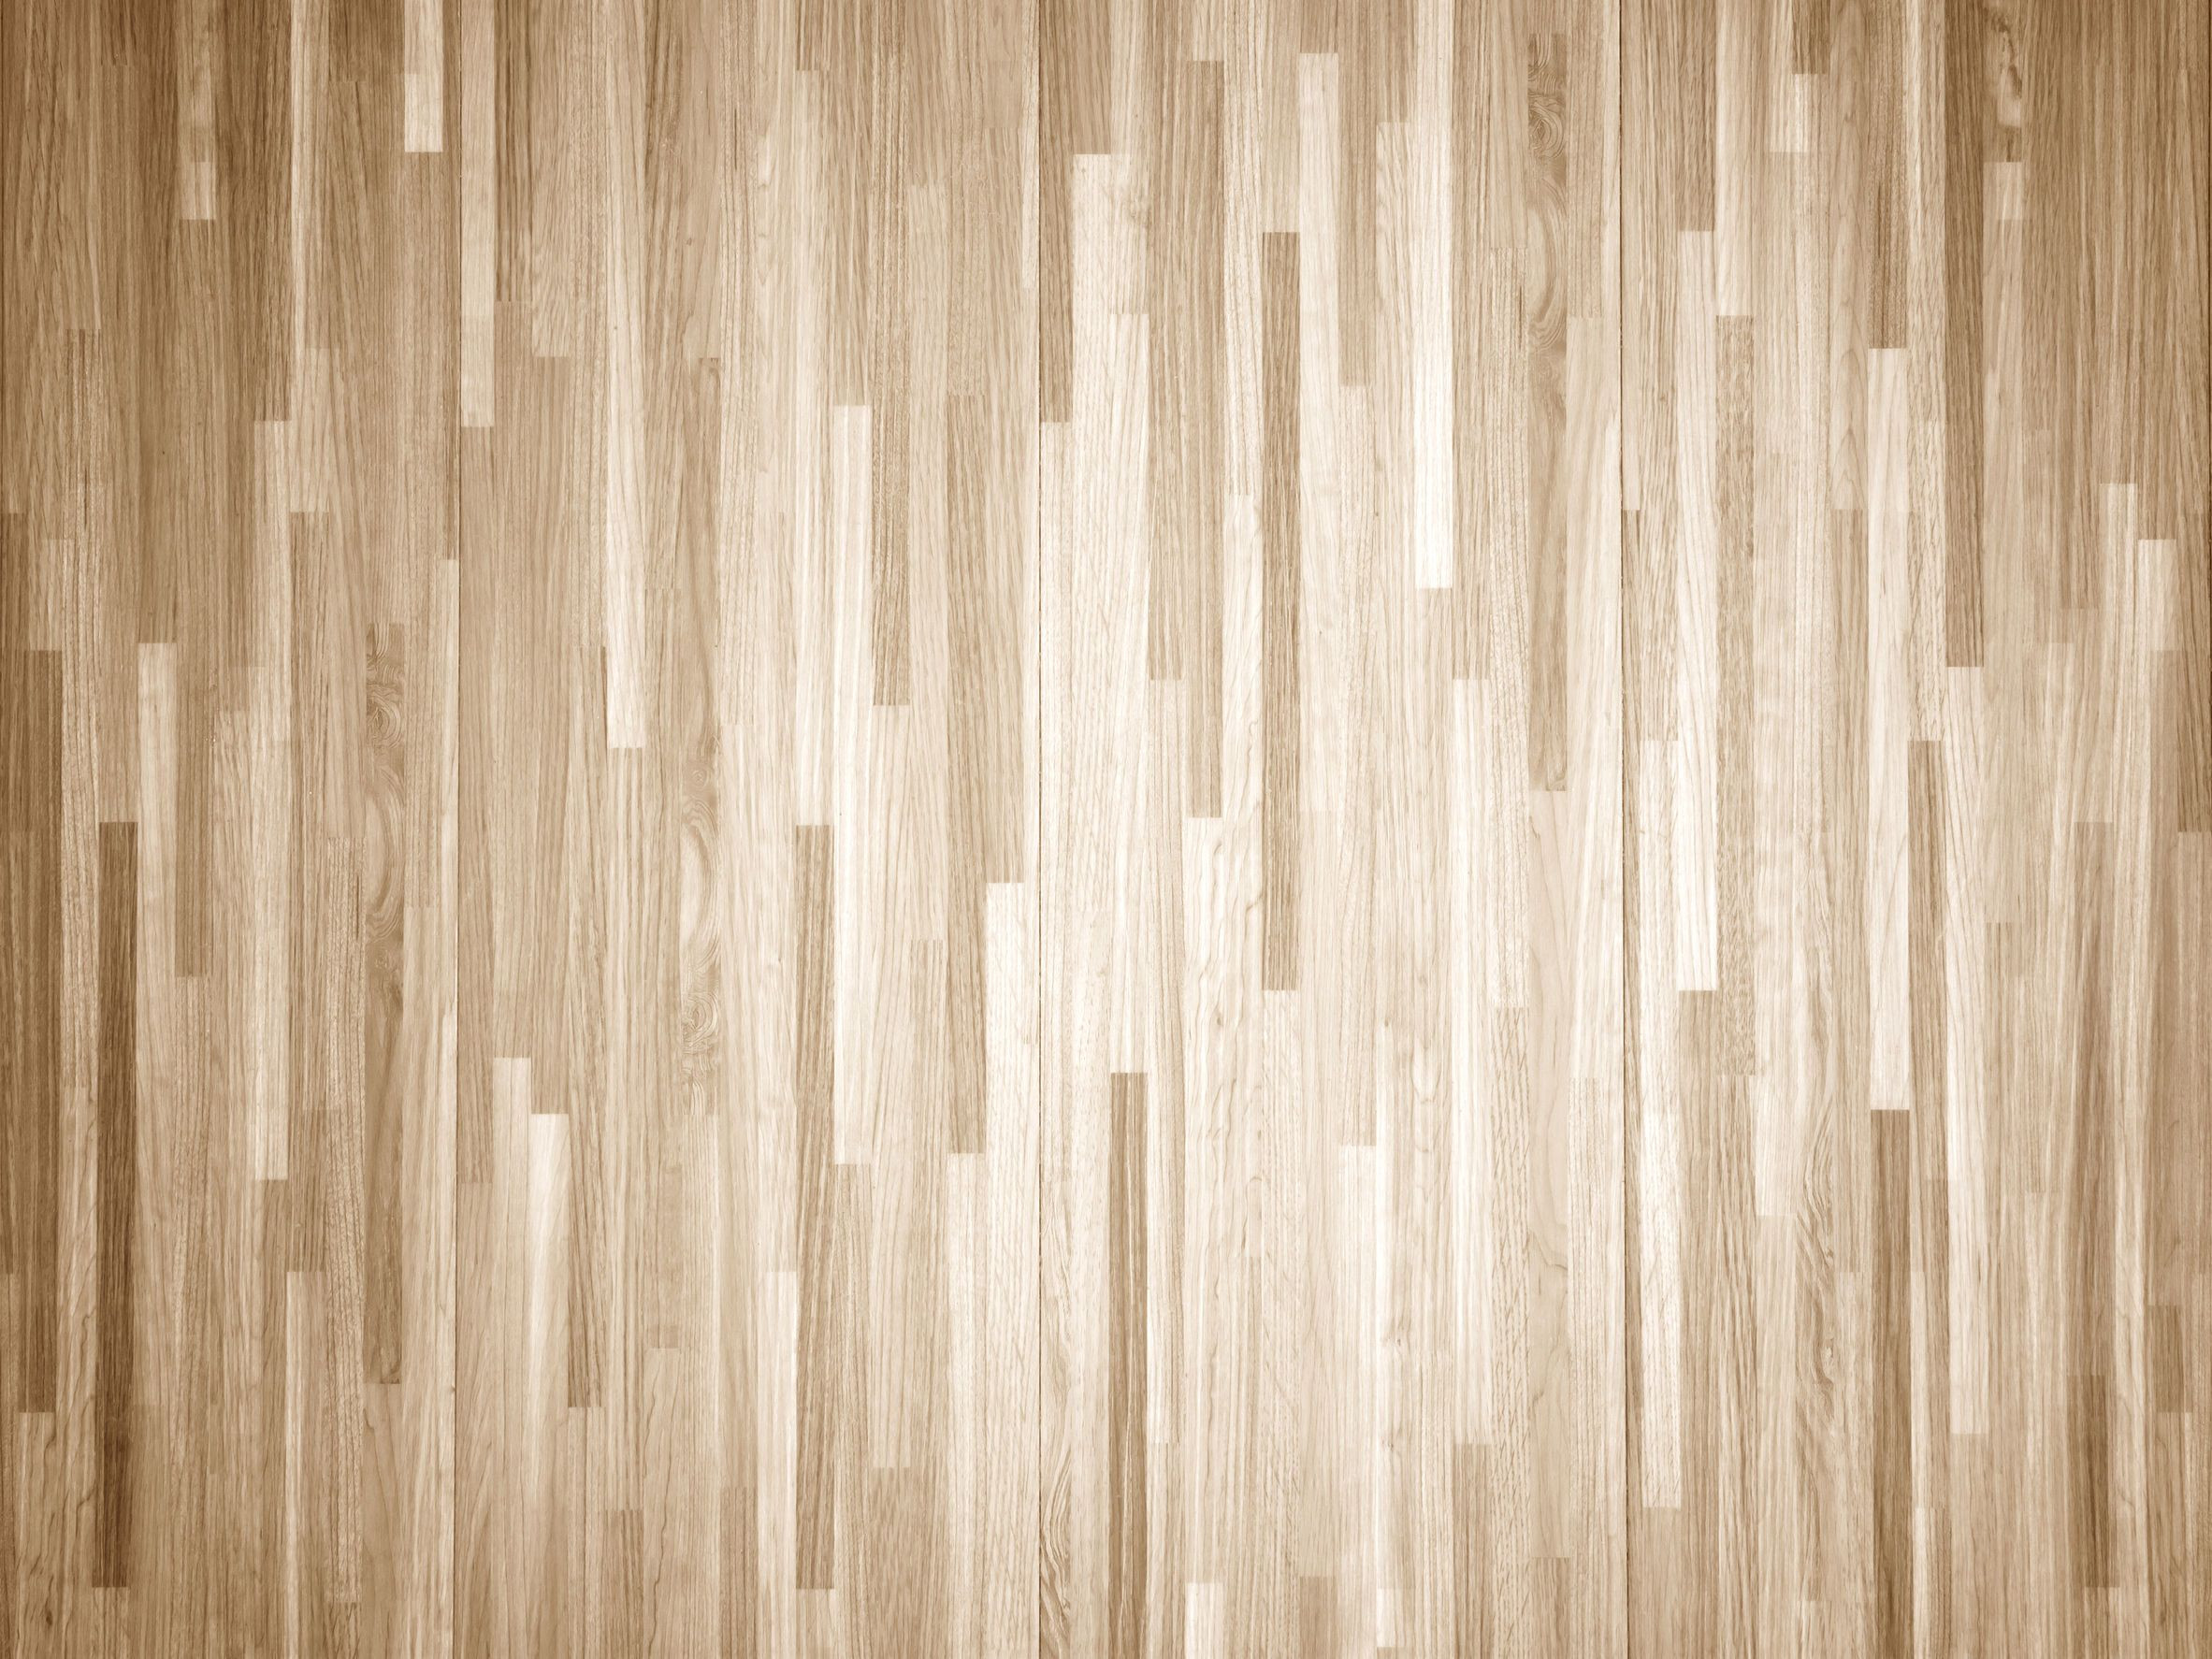 23 Famous 1 1 2 Hardwood Flooring 2024 free download 1 1 2 hardwood flooring of how to chemically strip wood floors woodfloordoctor com with regard to you